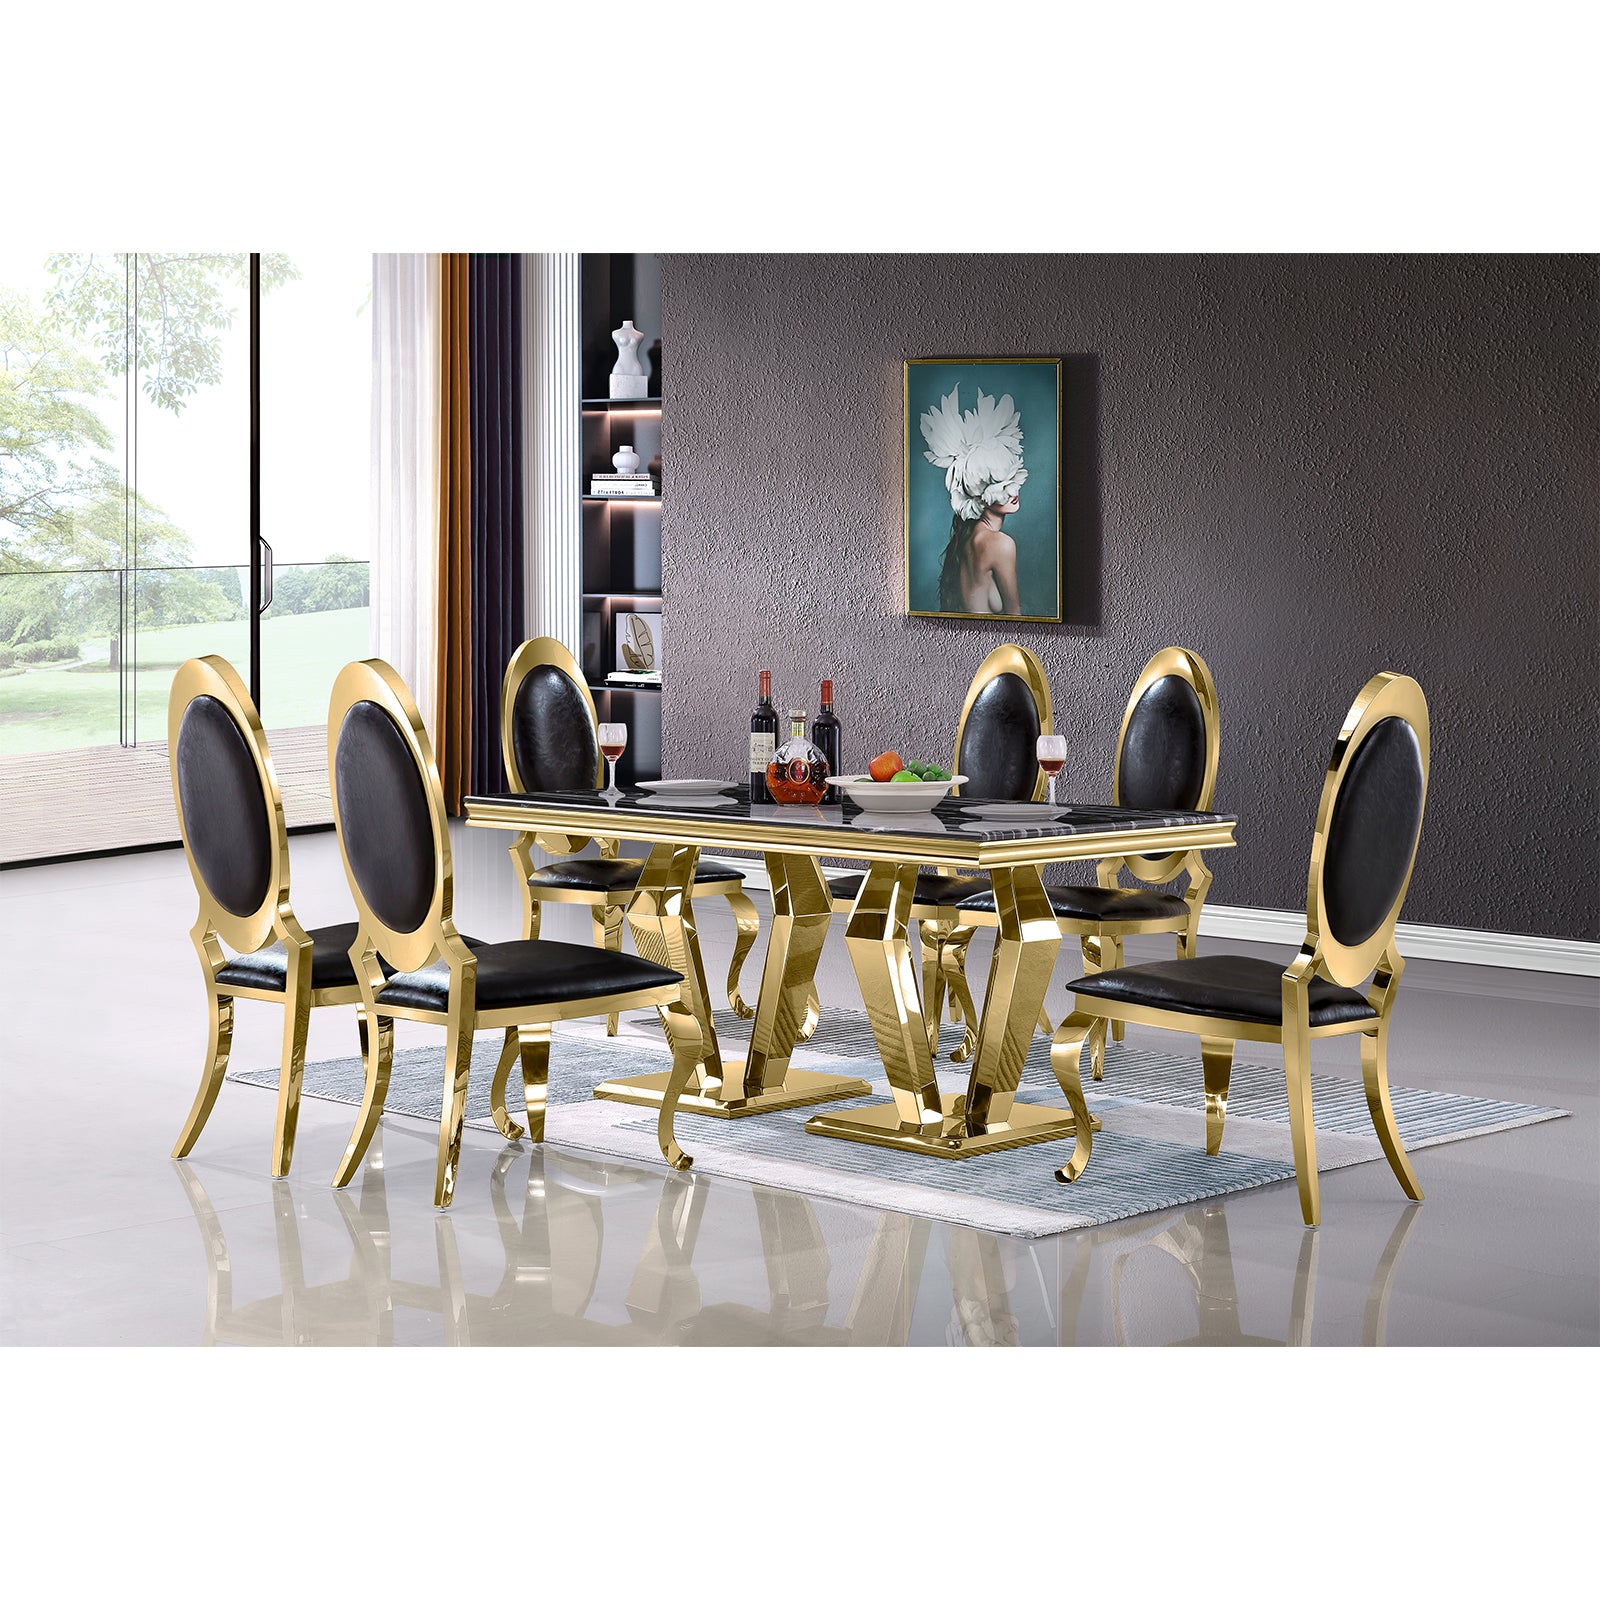 602-Set | AUZ Black and Gold Dining room Sets for 6